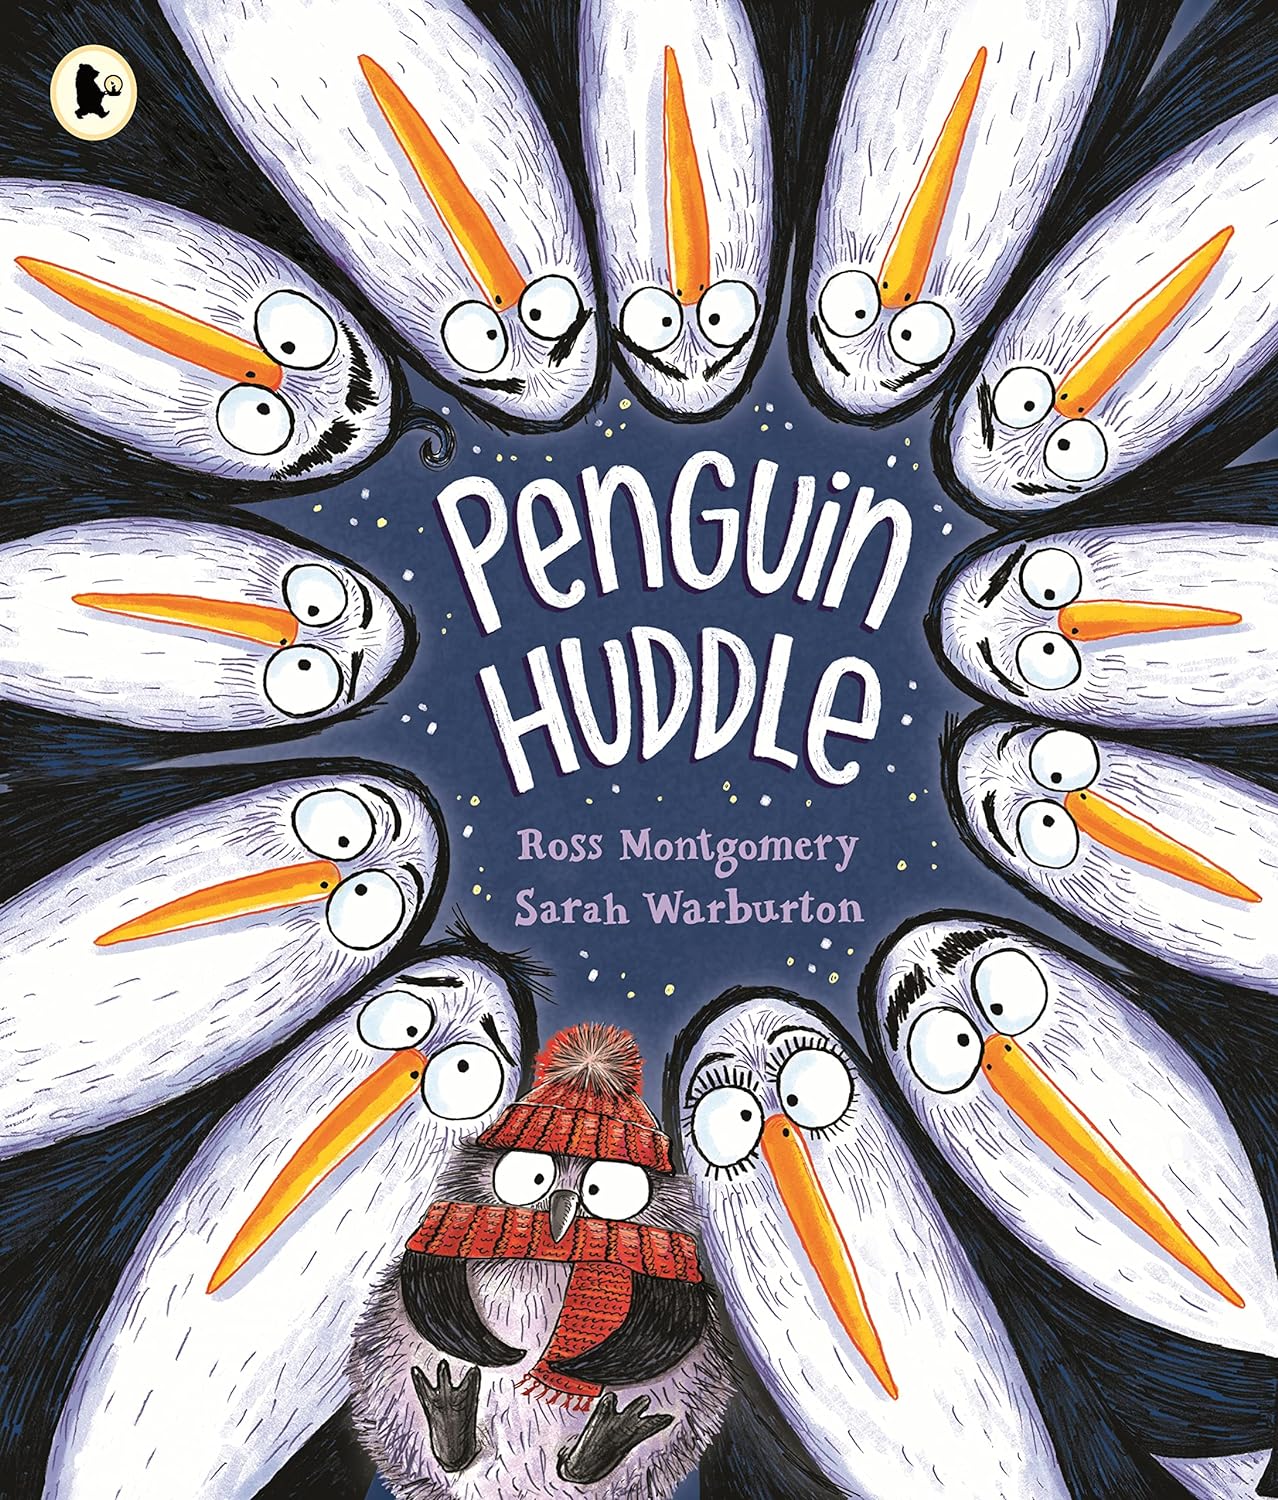 Penguin Huddle - Ross Montgomery